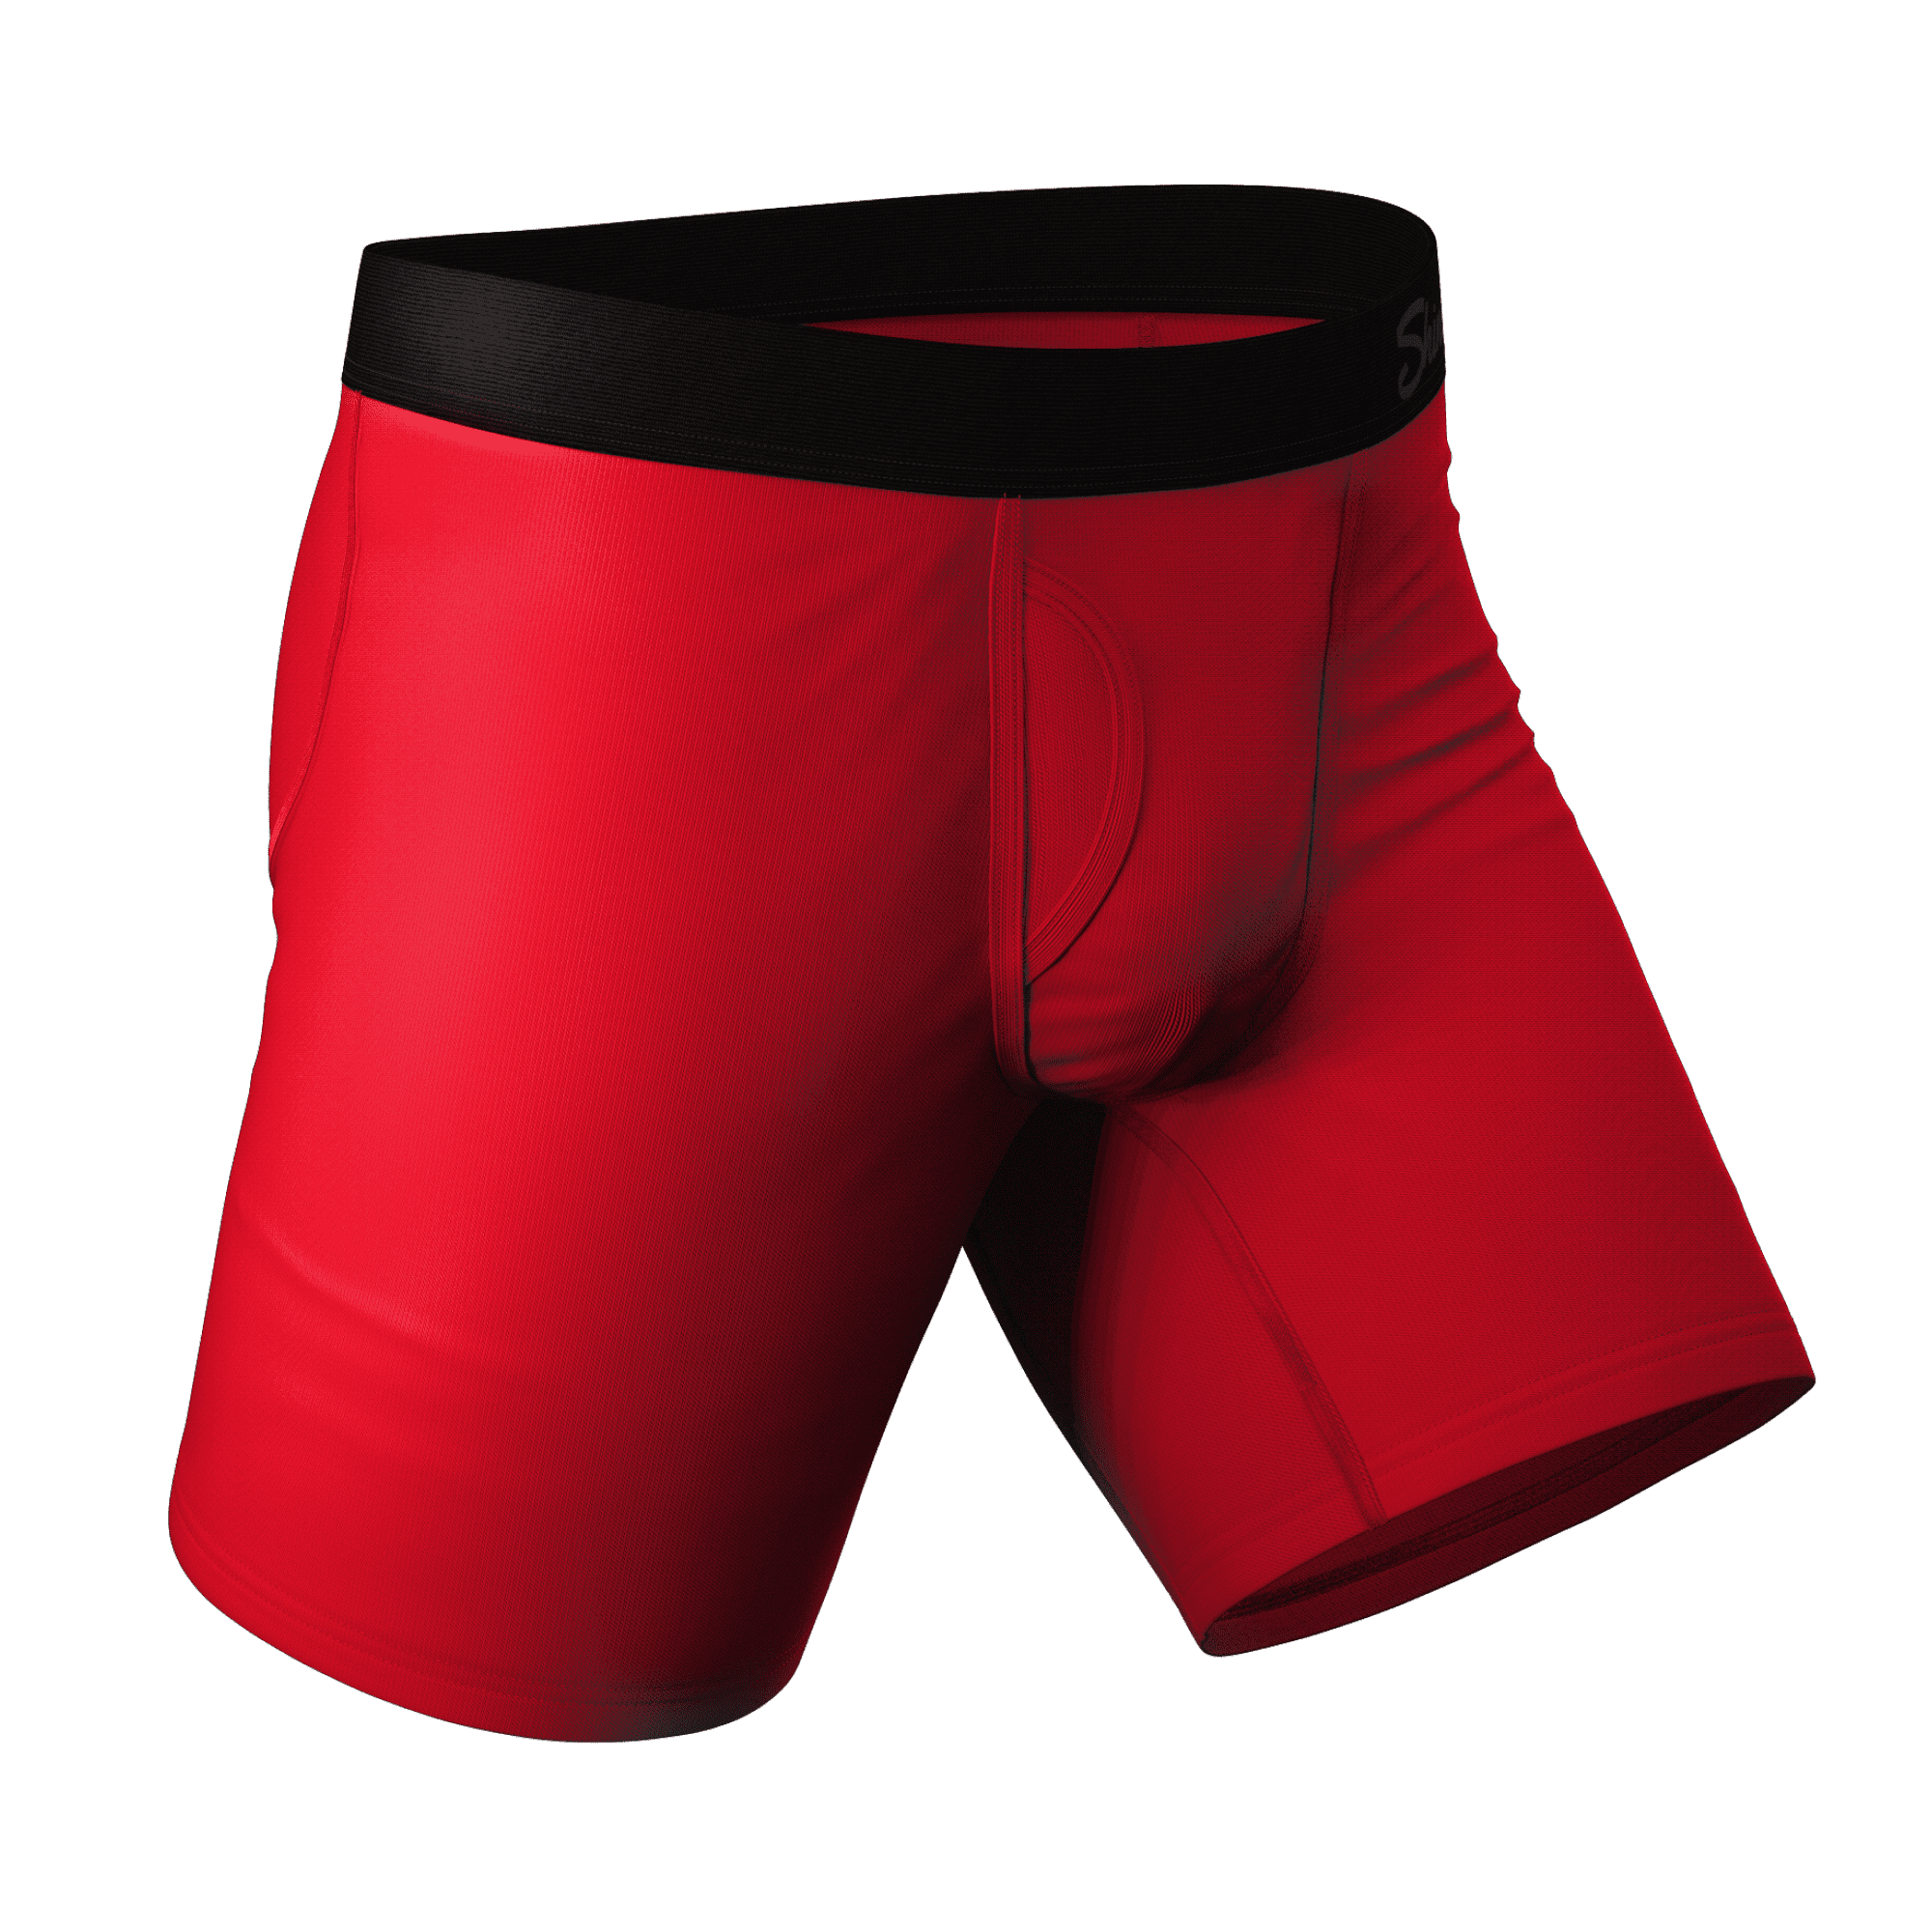 The Mascot - Shinesty American Flag Ball Hammock Pouch Underwear Small